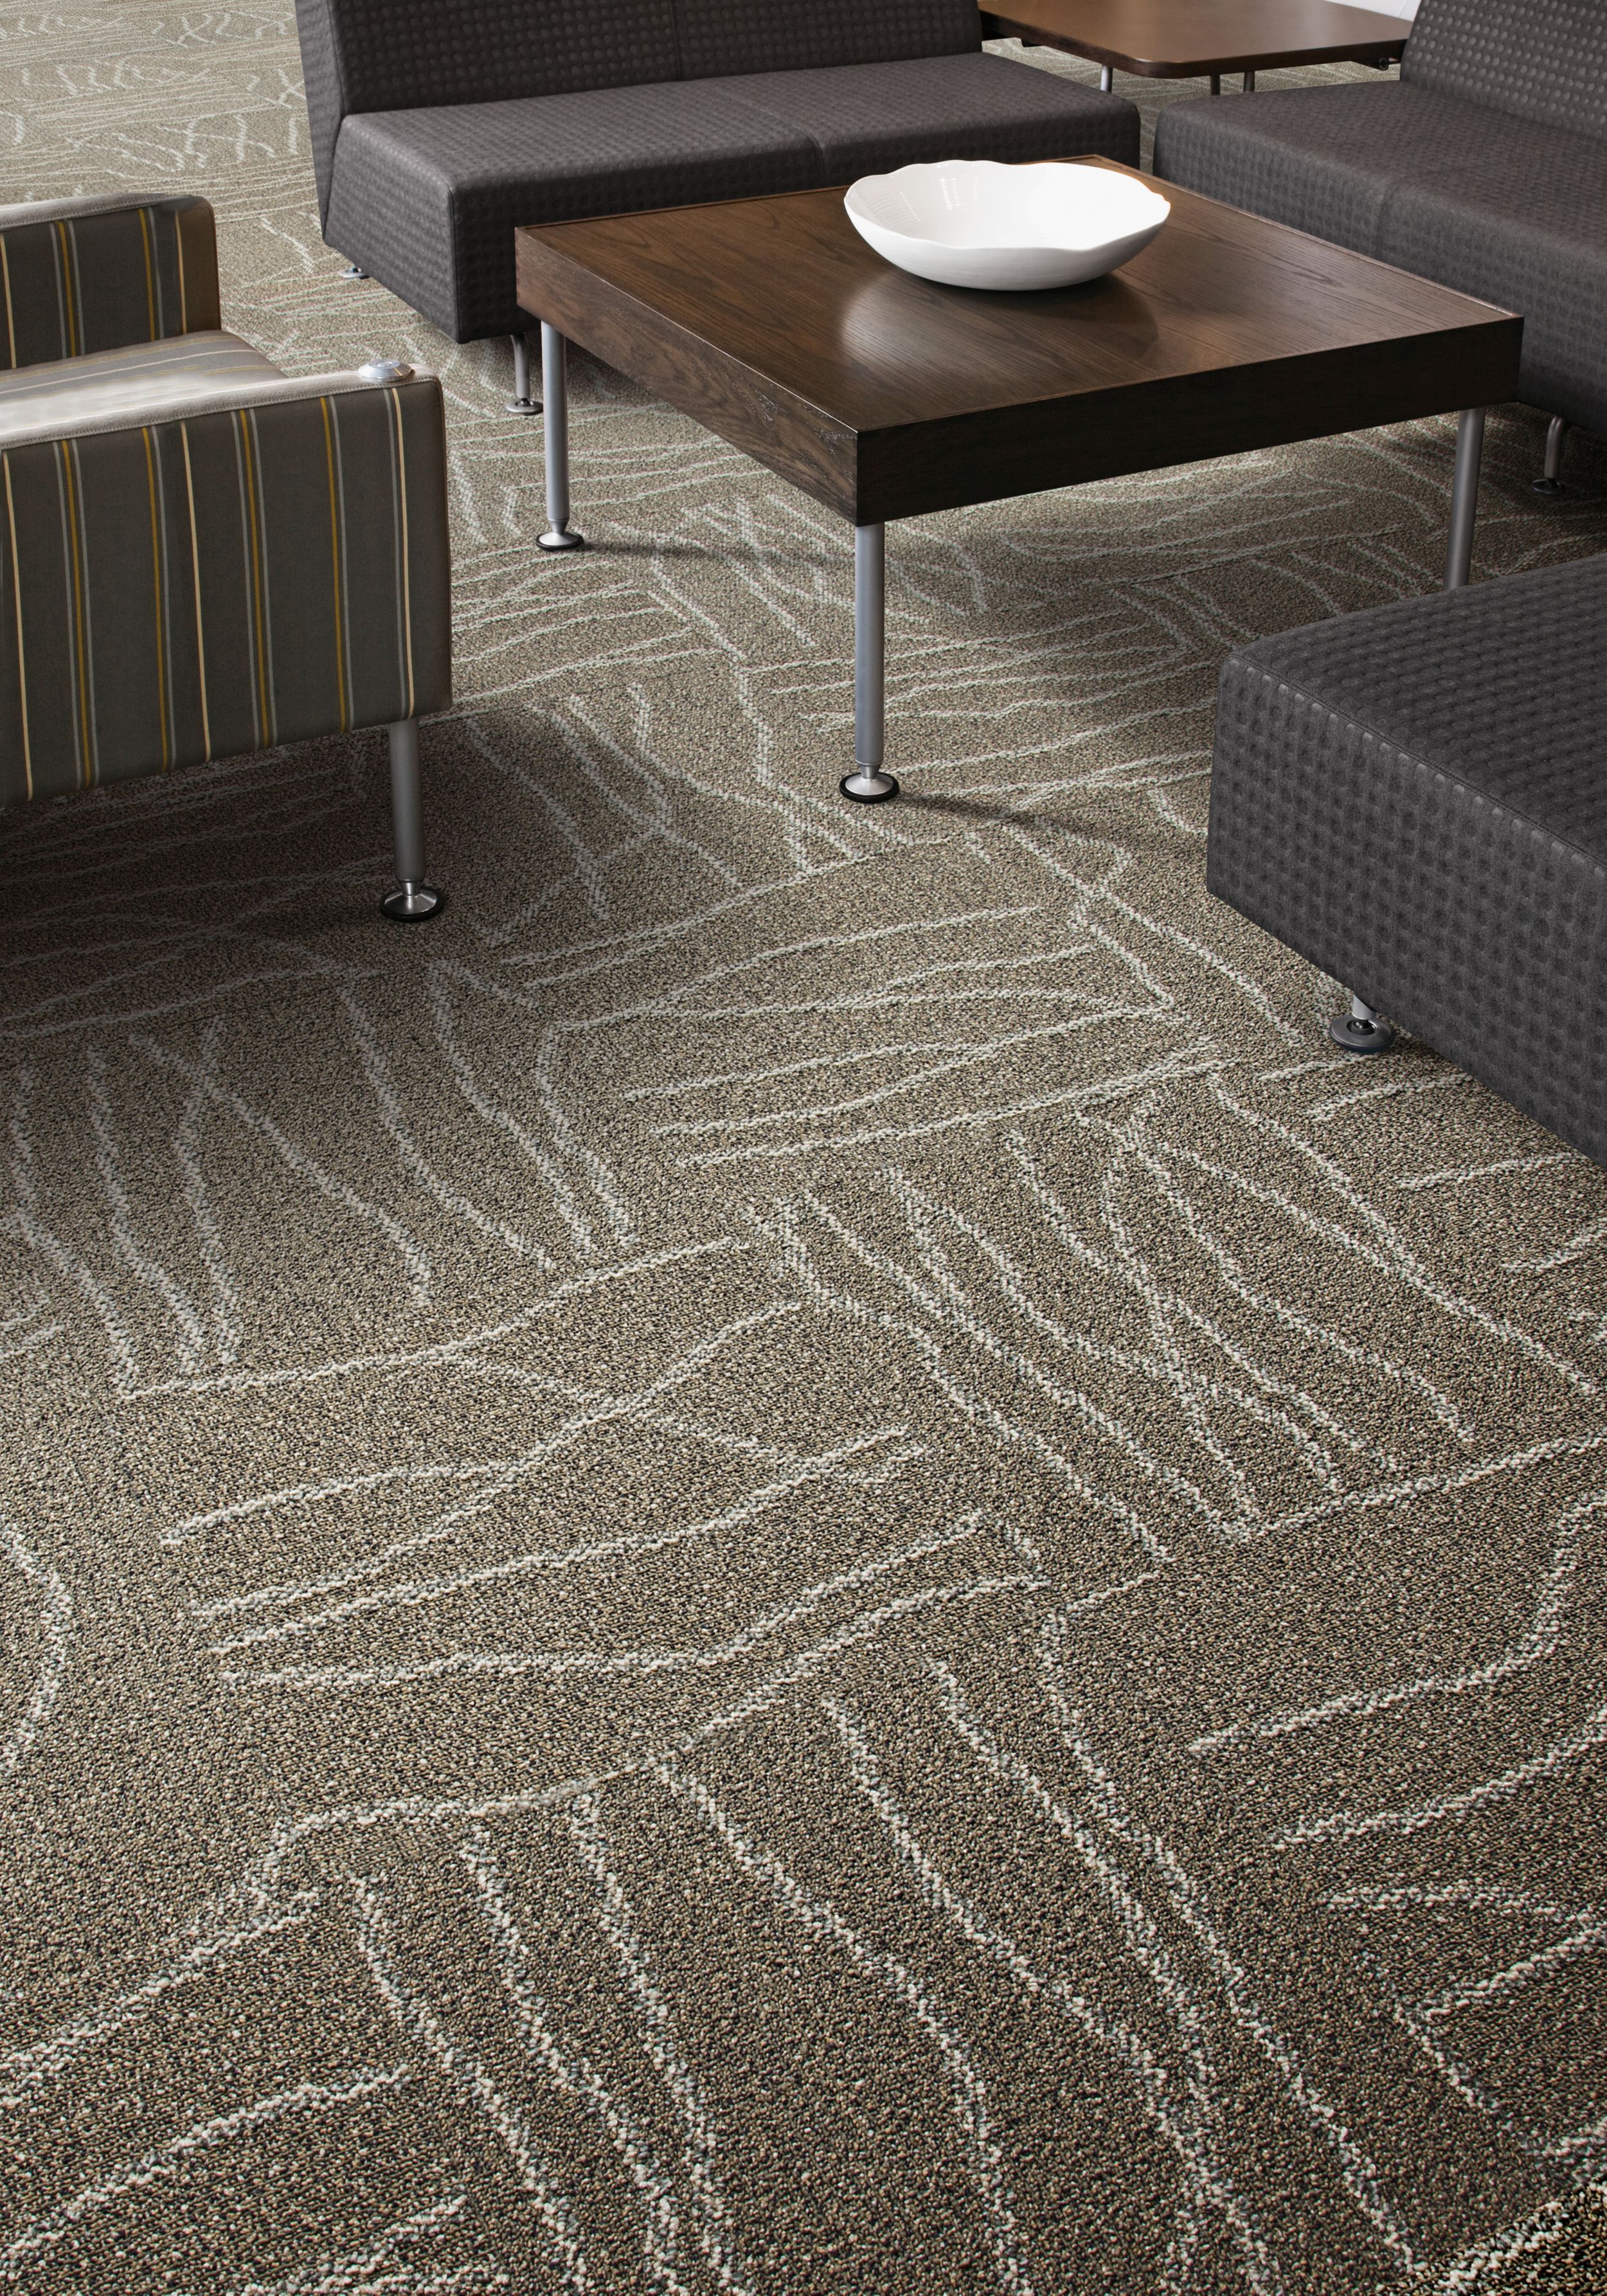 Interface Nagashi II carpet tile in office lobby imagen número 3